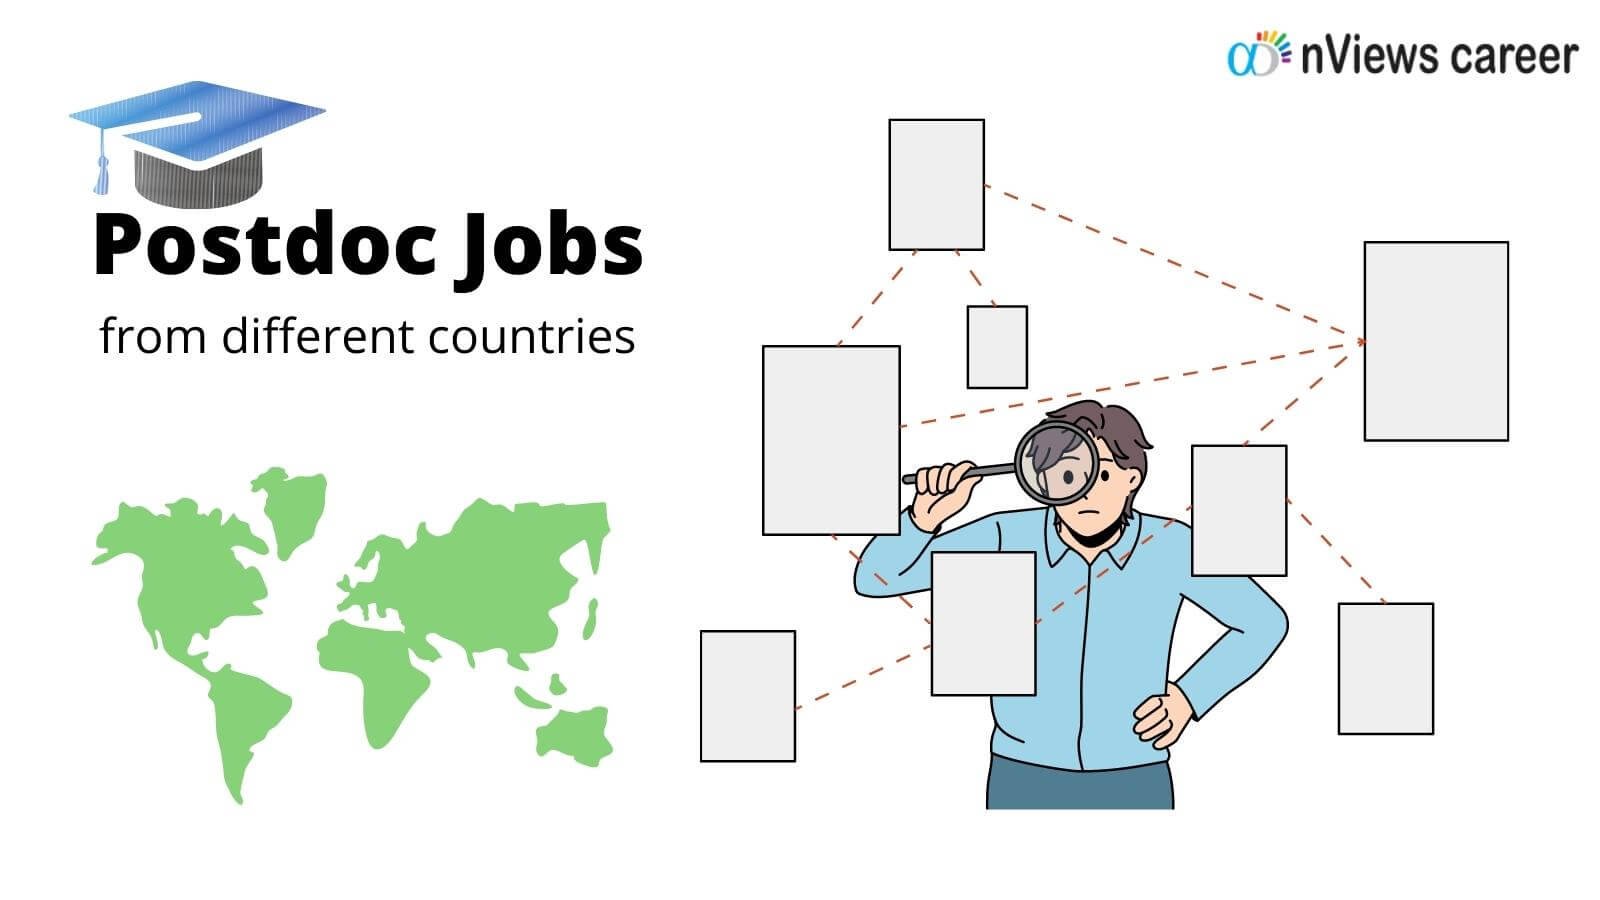 Postdoc jobs or positions